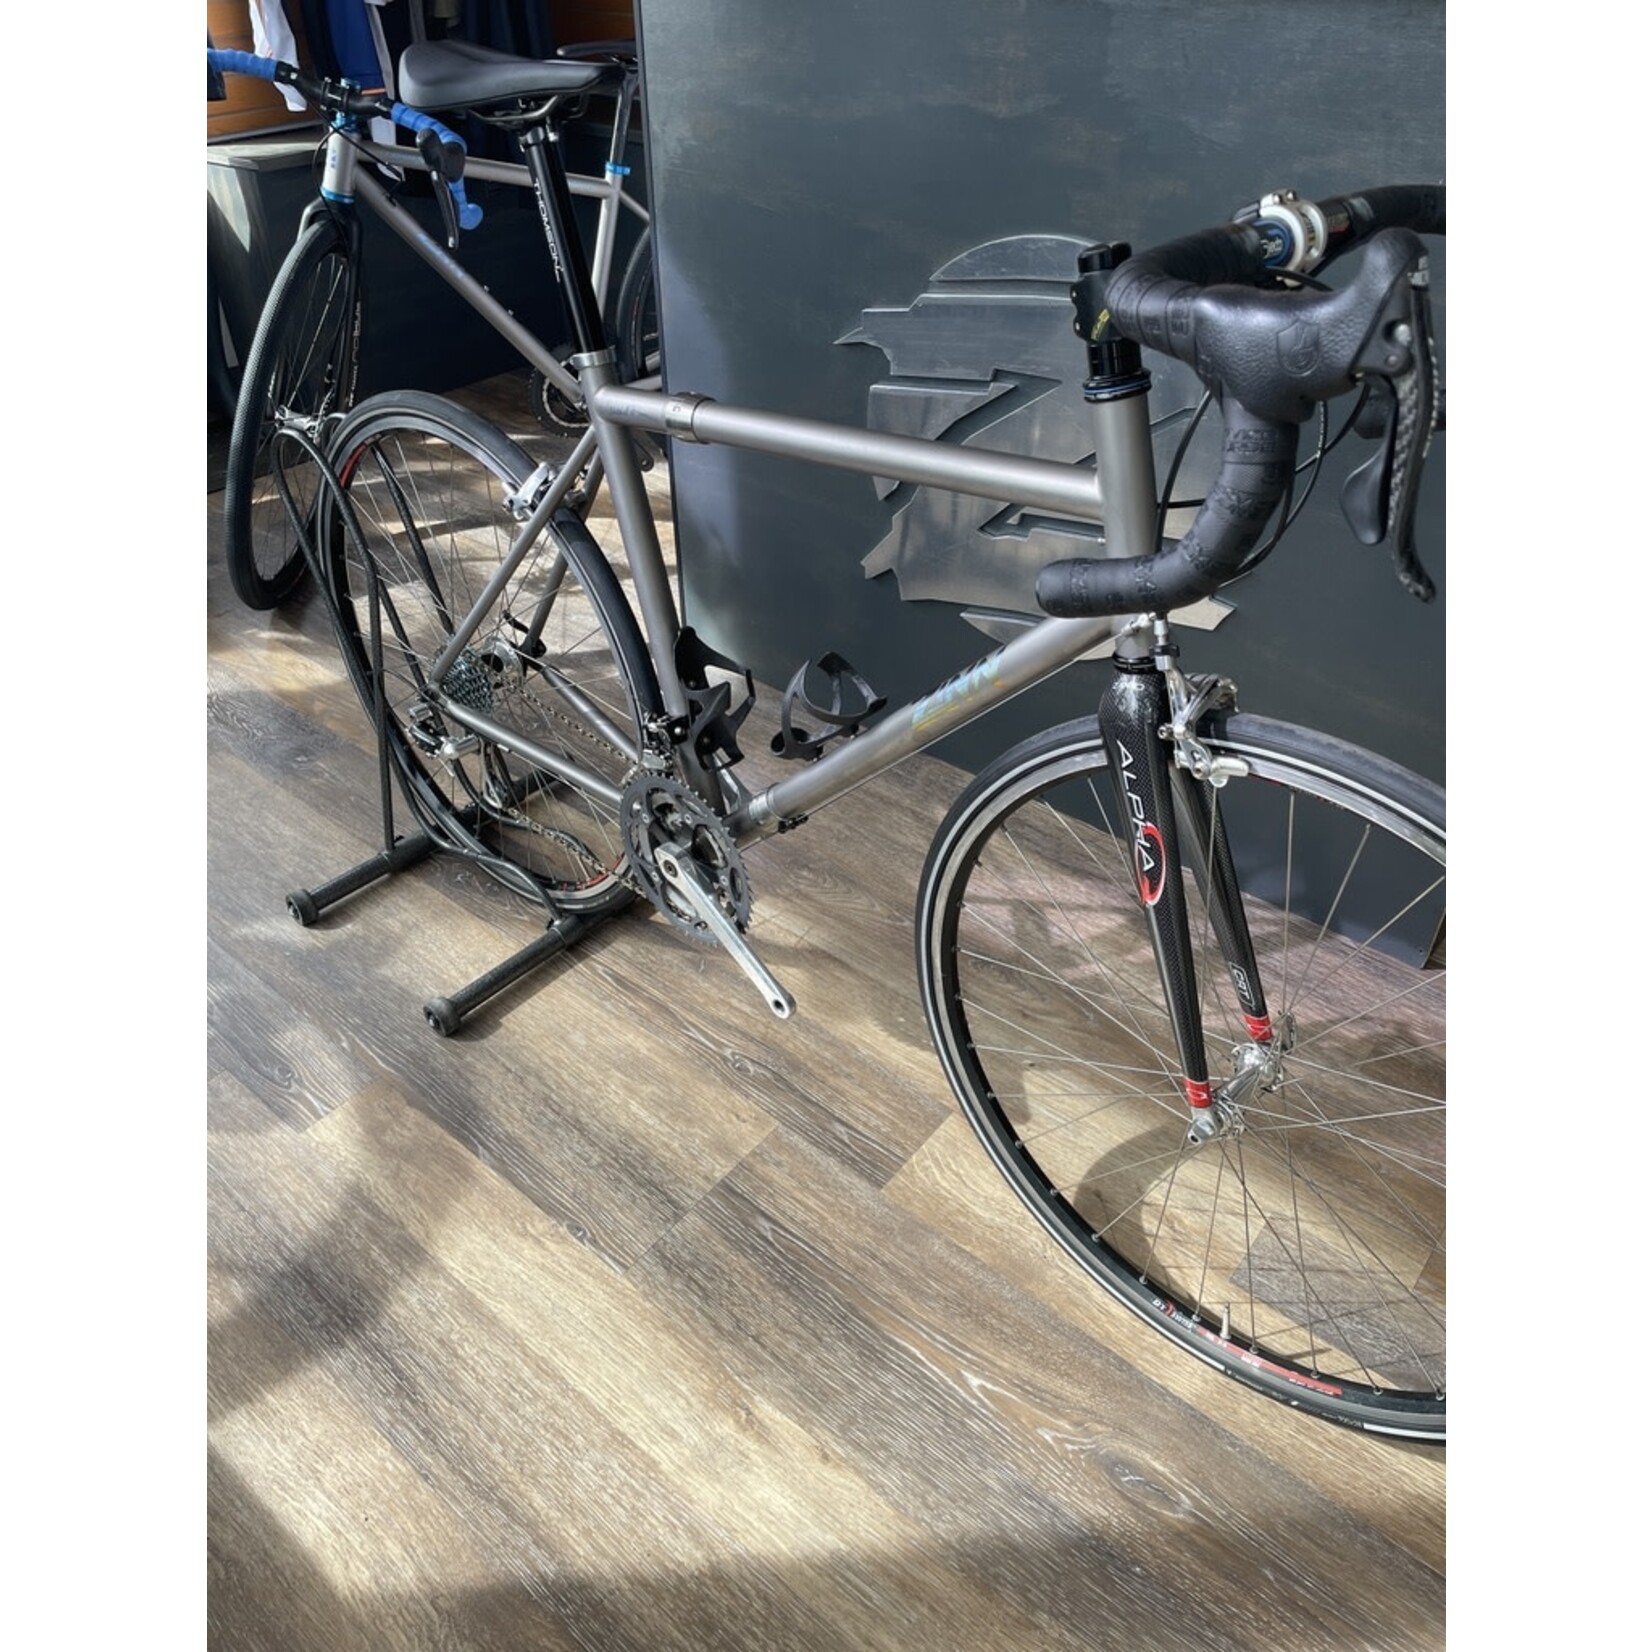 Zinn Custom Titanium Road Travel Bike - Used in great condition for 6'1" - 6'4" rider